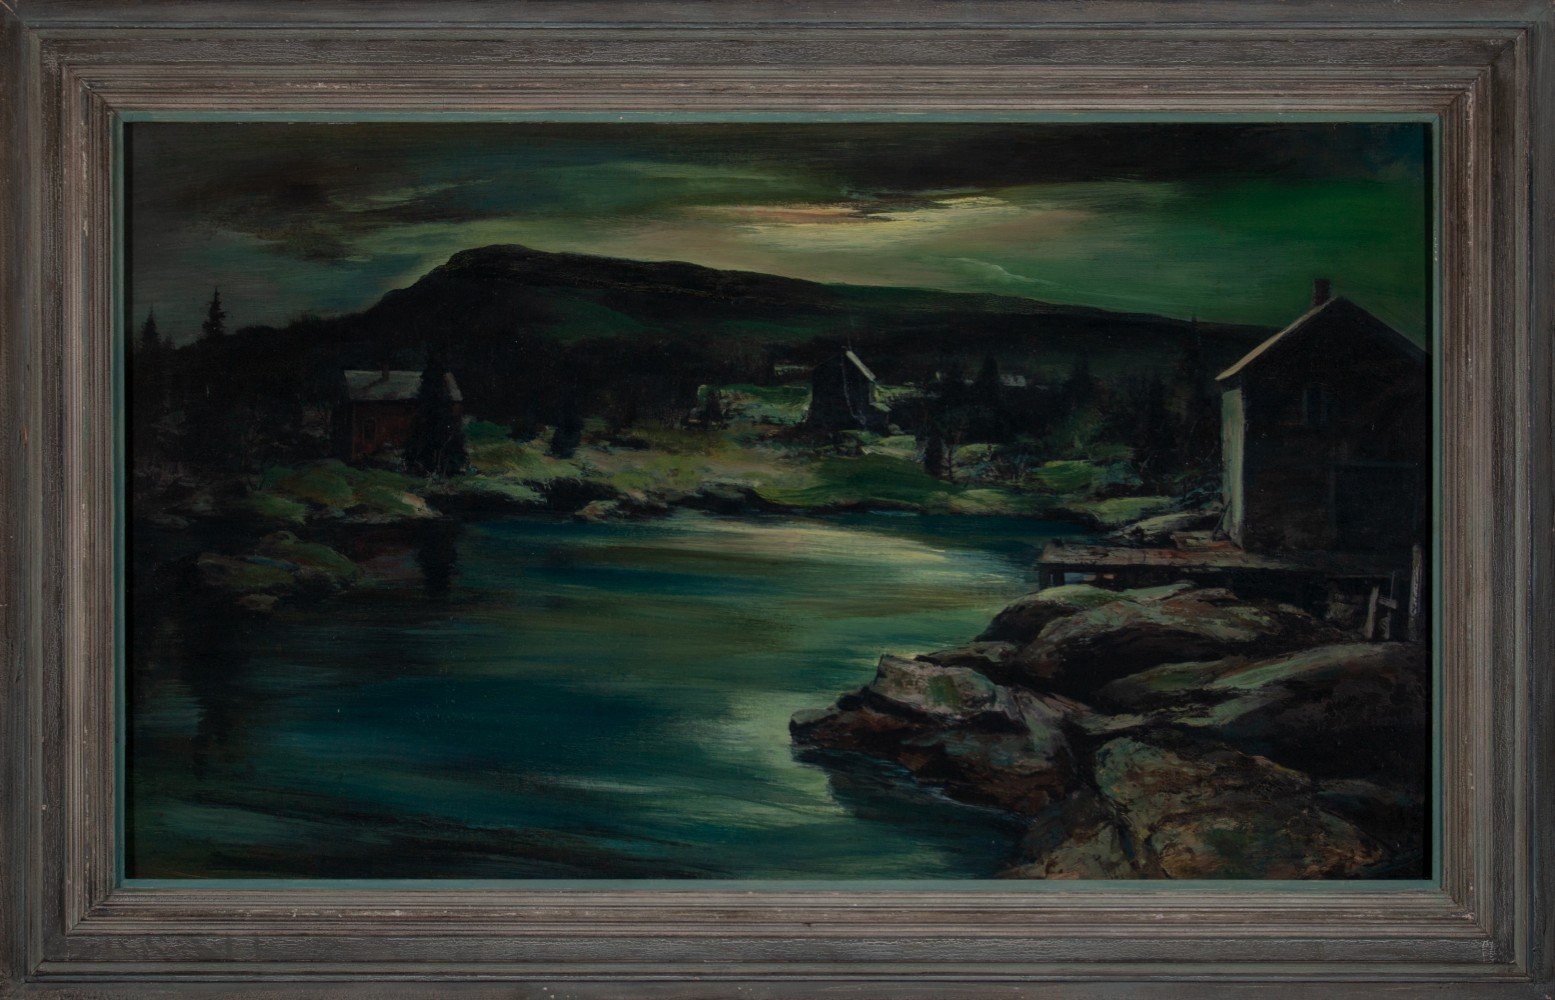 Clyde Cove, Moonlight by Carl Frederick Gaertner